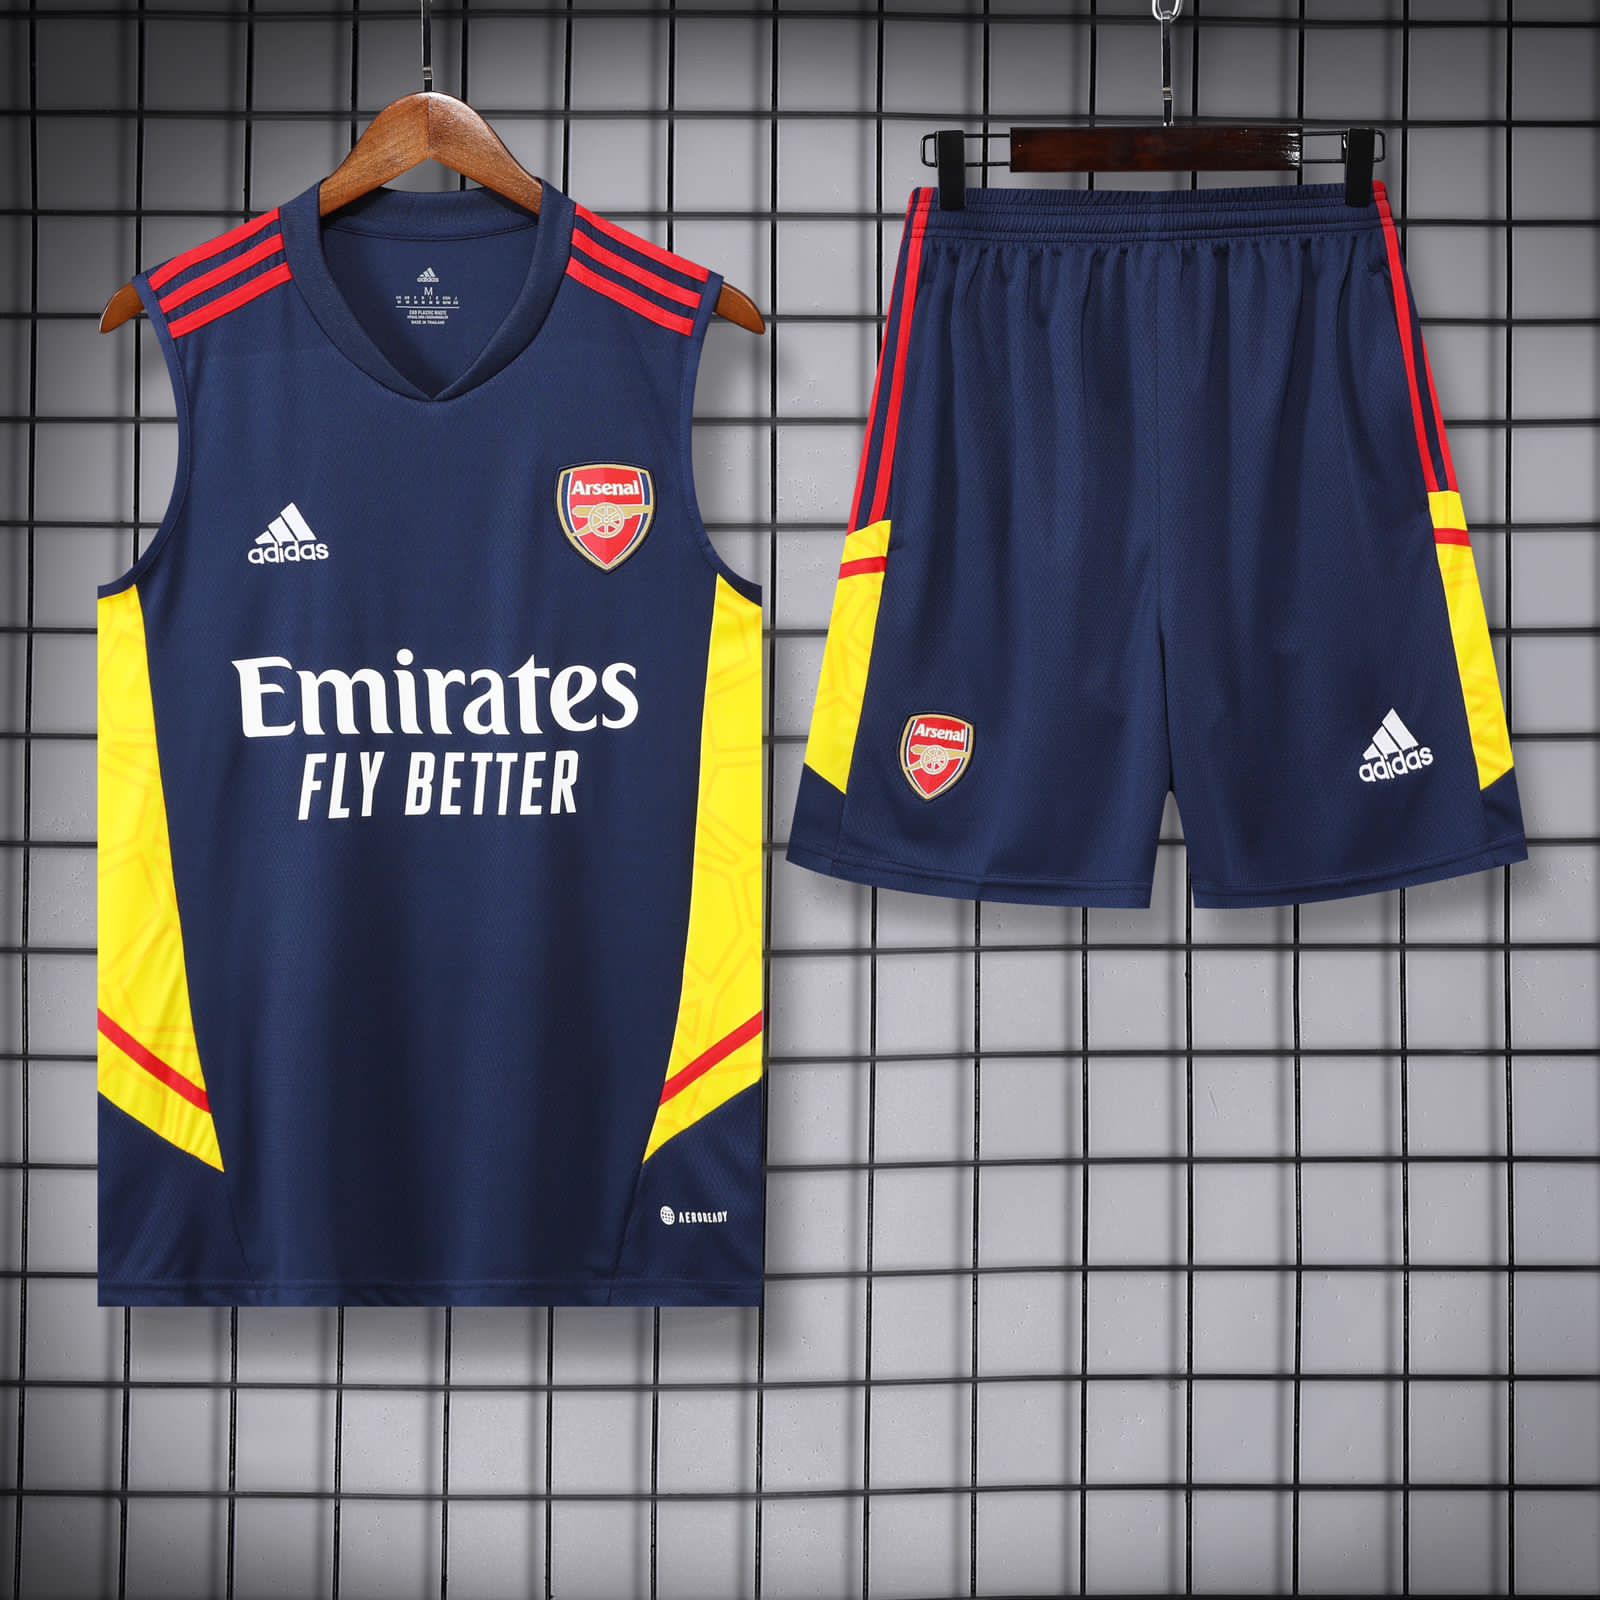 Arsenal Navy Blue & yellow Sleeveless Jersey With Shorts